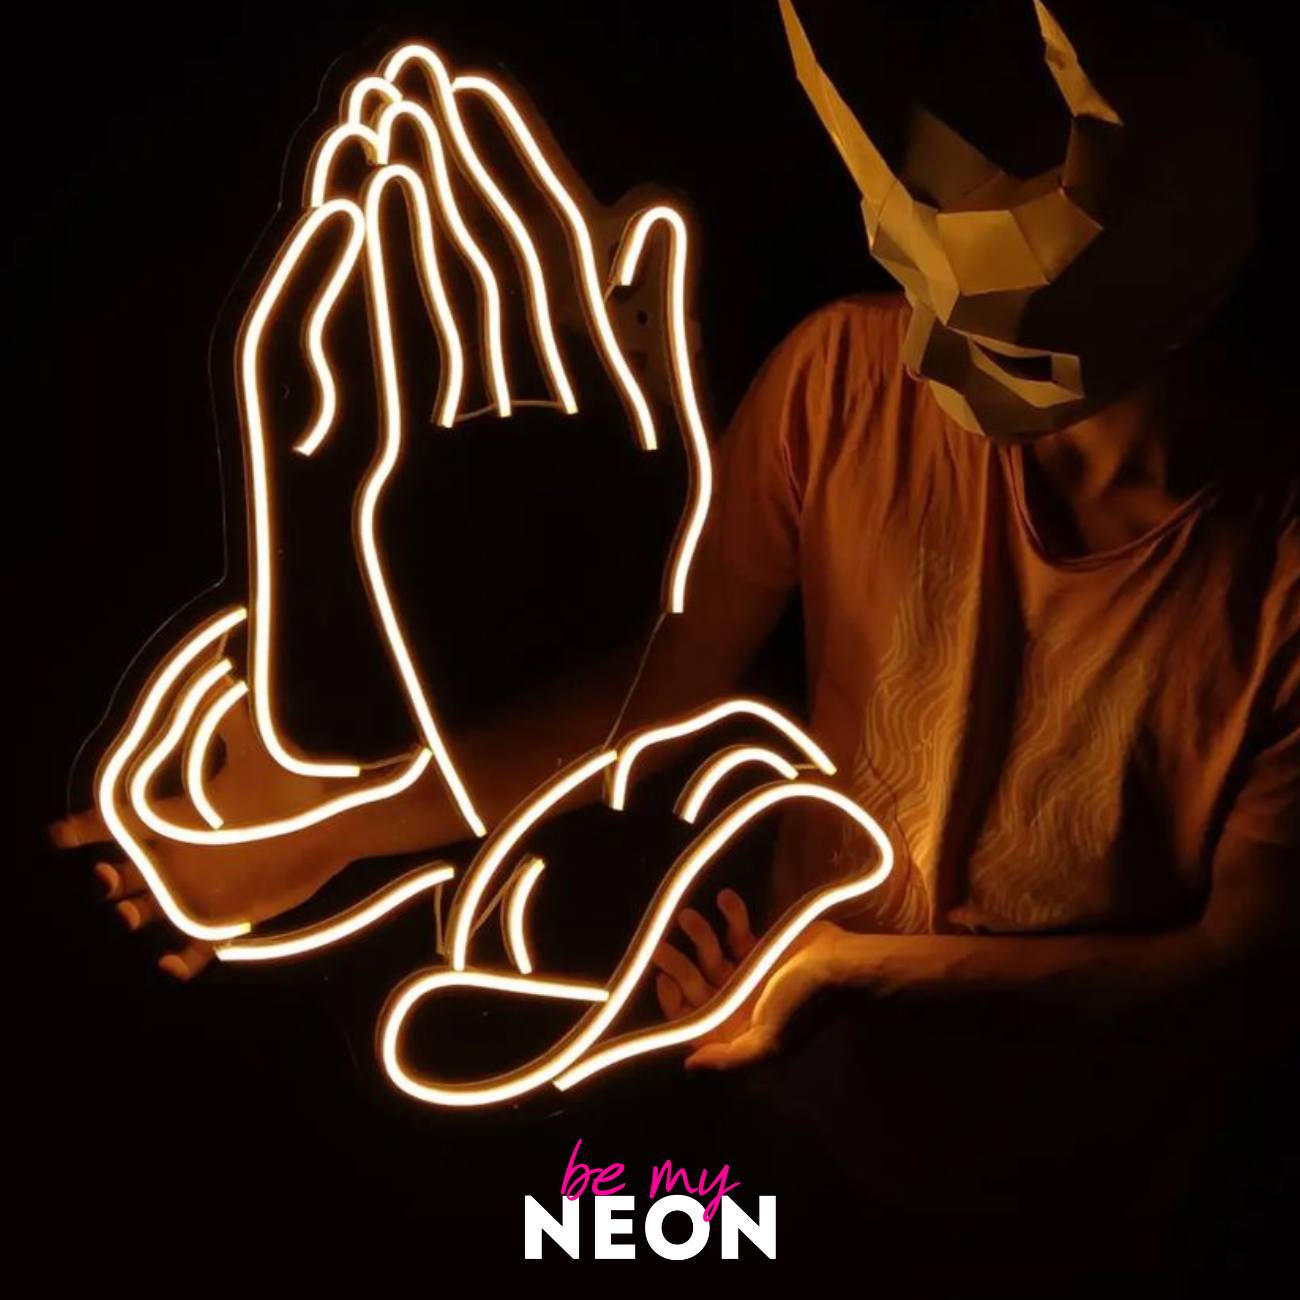 "Pray Hände Beten" LED Neonschild